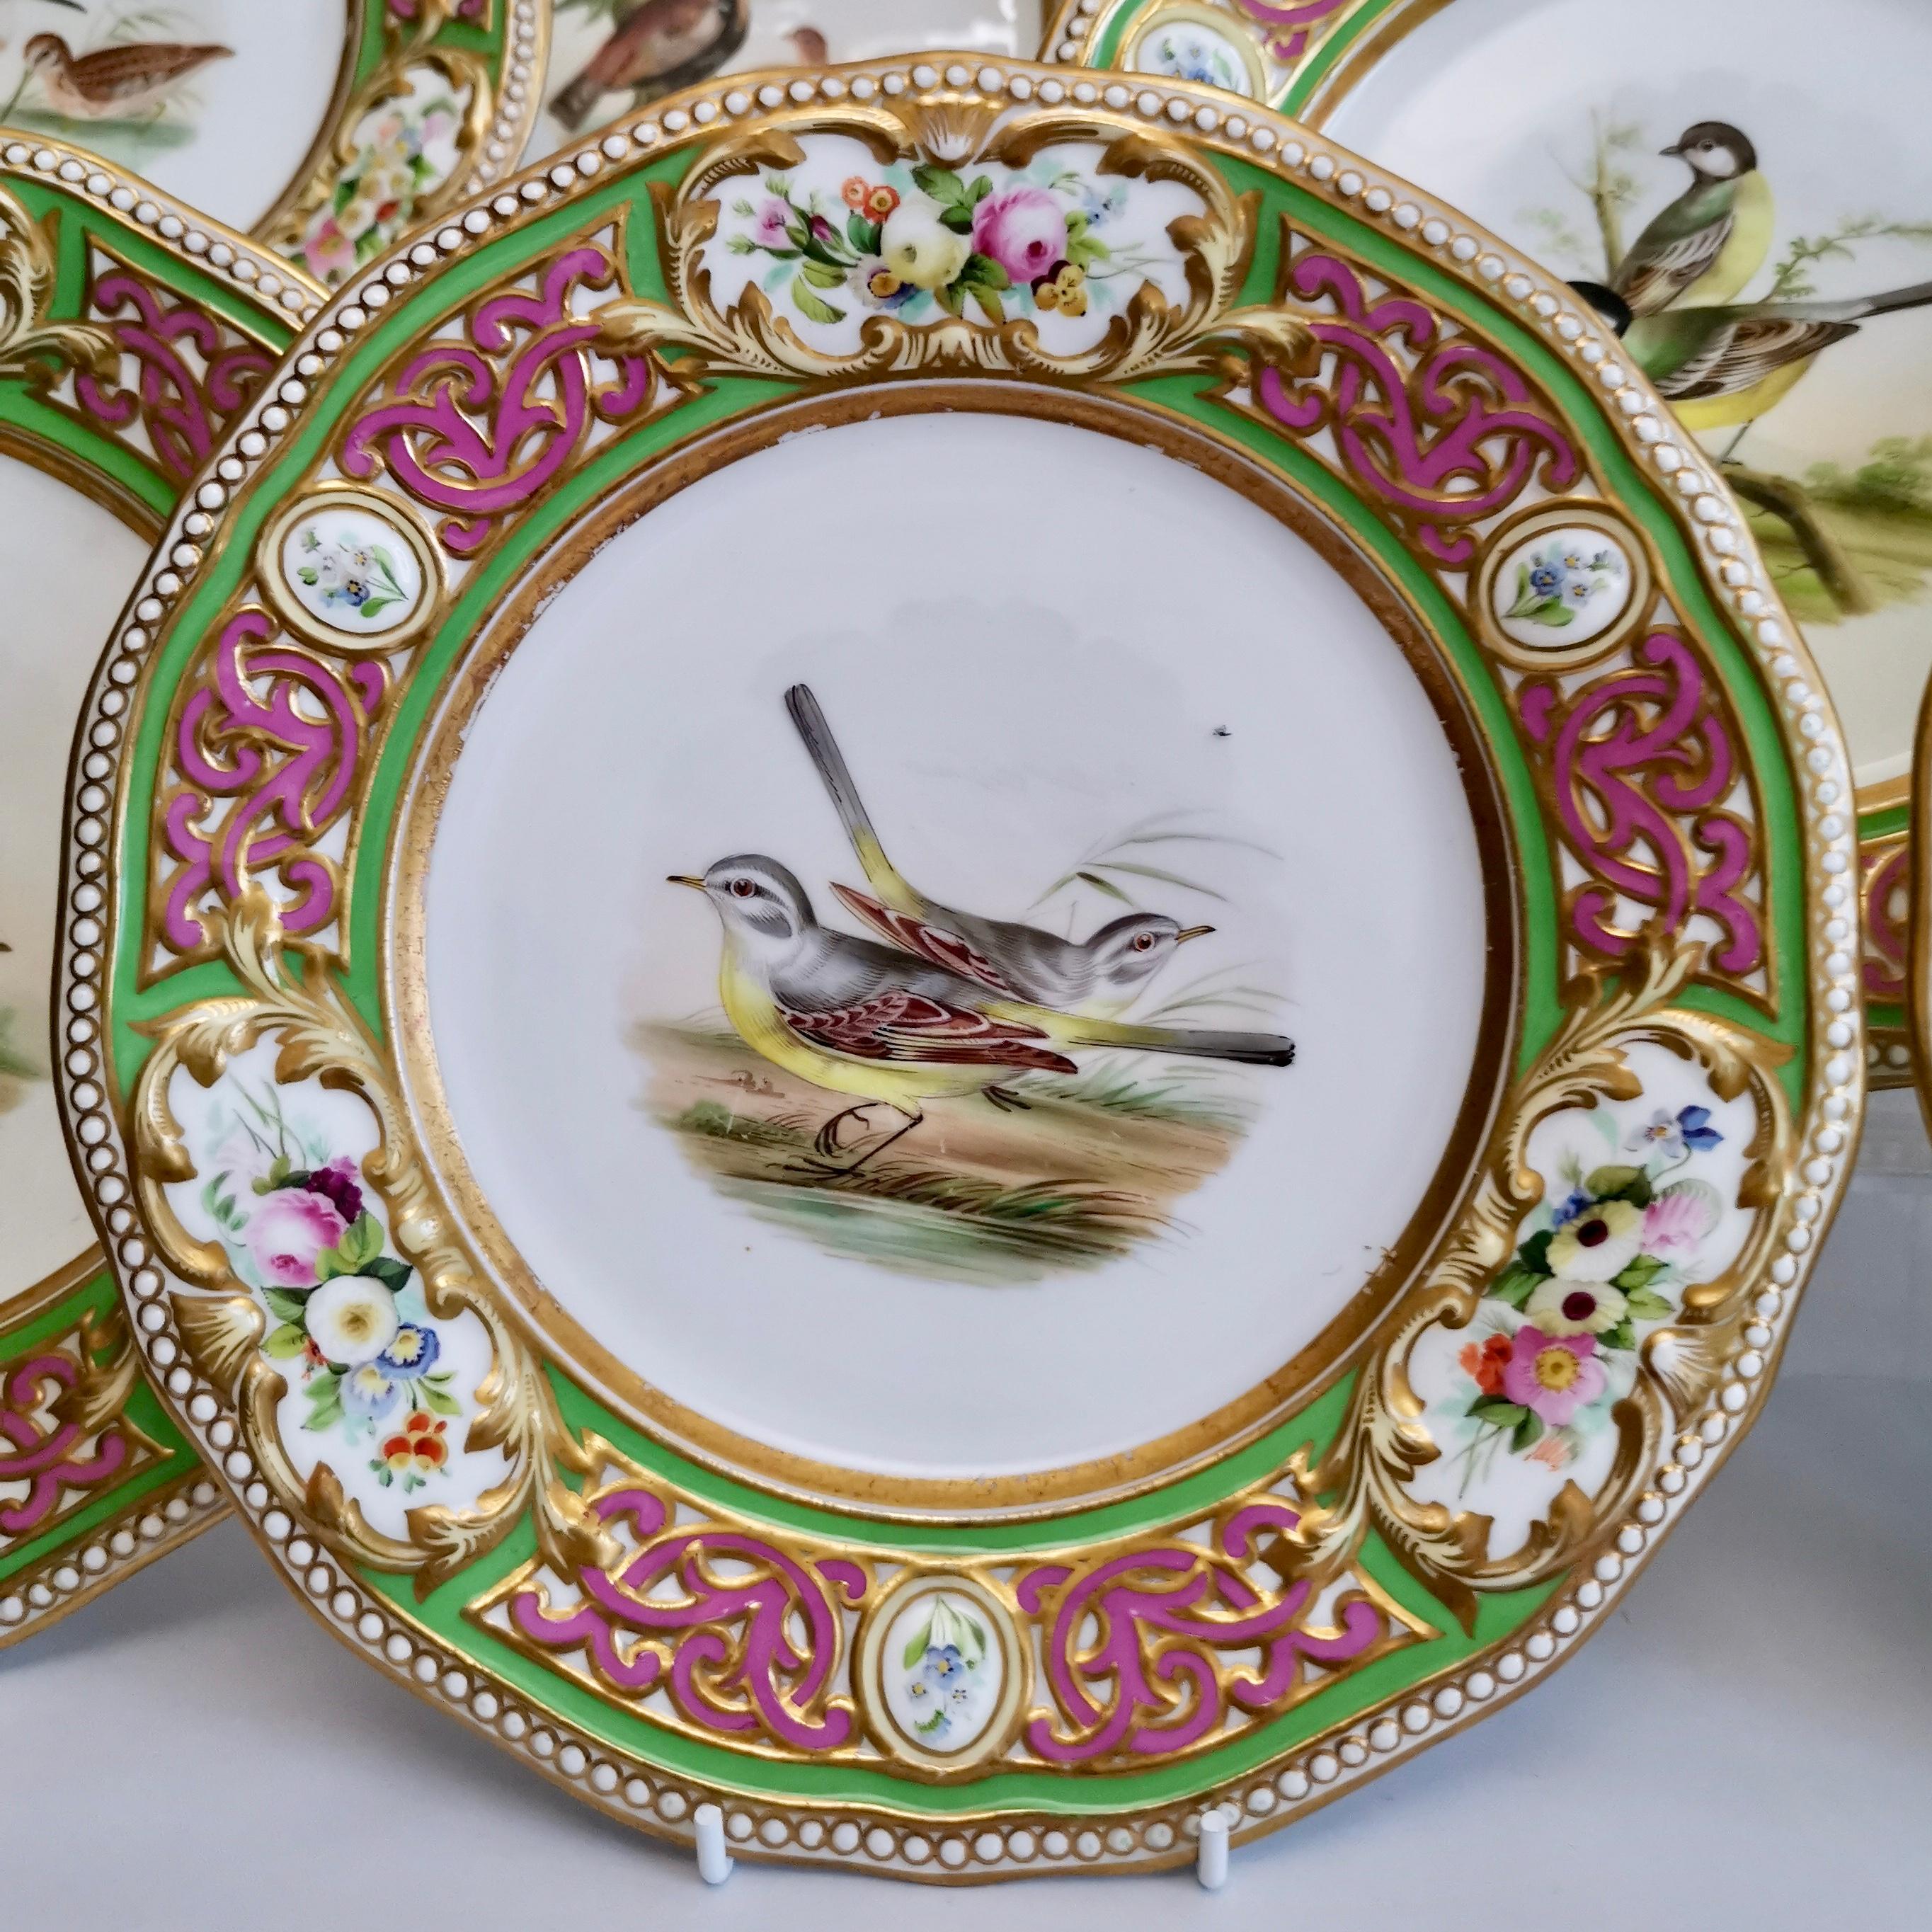 Mid-19th Century Grainger Worcester Porcelain Dessert Service, Persian Revival with Birds, 1855